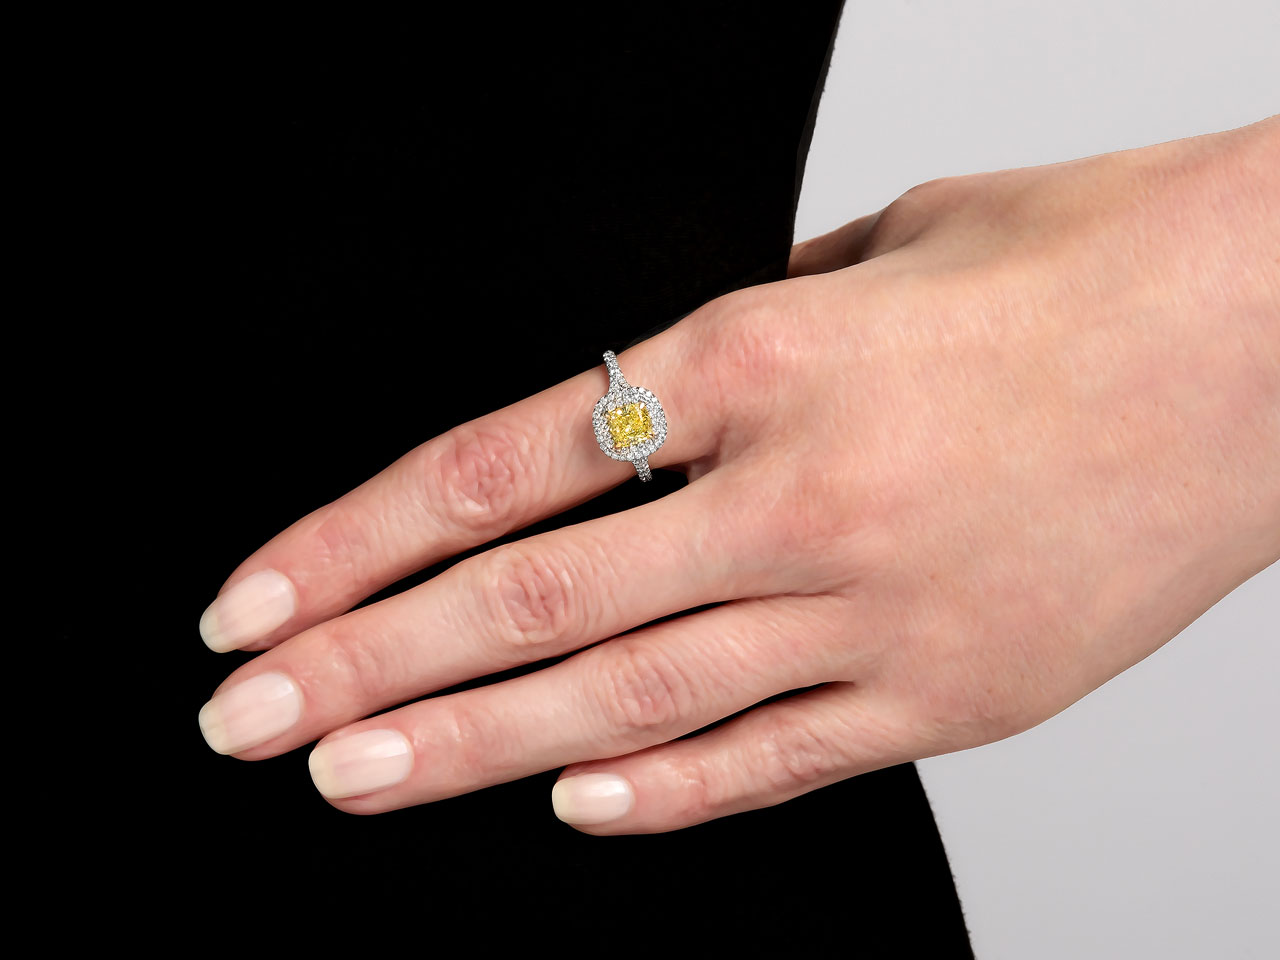 Tiffany & Co. Platinum Princess Cut Diamond Engagement Ring Size 6.25 -  $2,850.00 at El Palacio Jewelry Shop